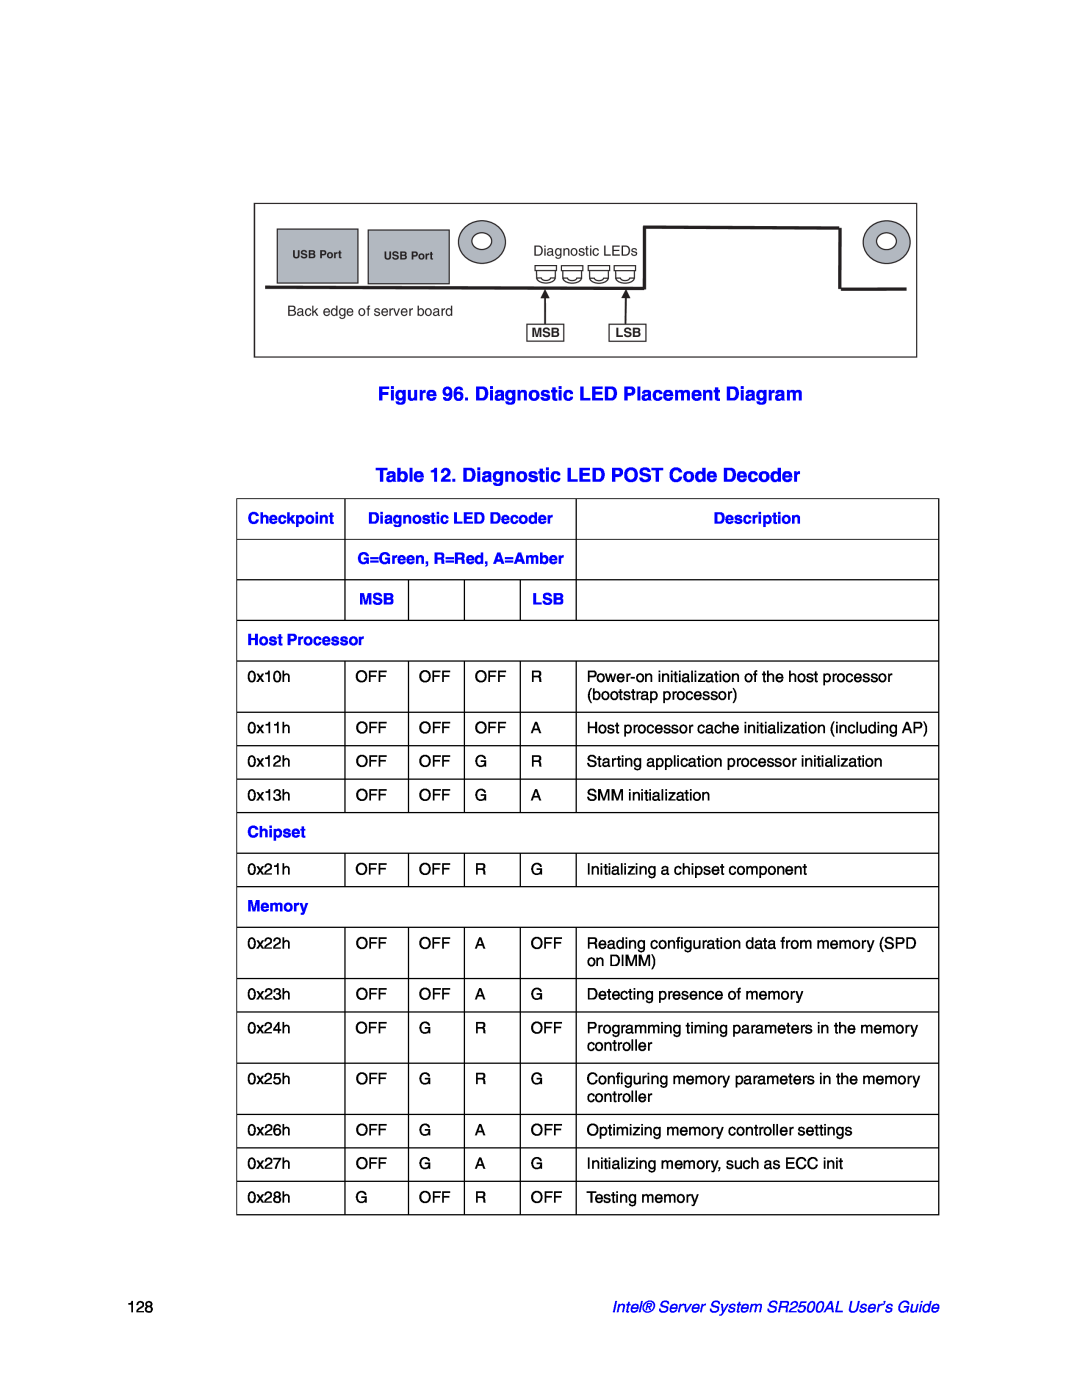 Intel SR2500AL manual Diagnostic LED Placement Diagram, Diagnostic LED POST Code Decoder, Diagnostic LEDs 